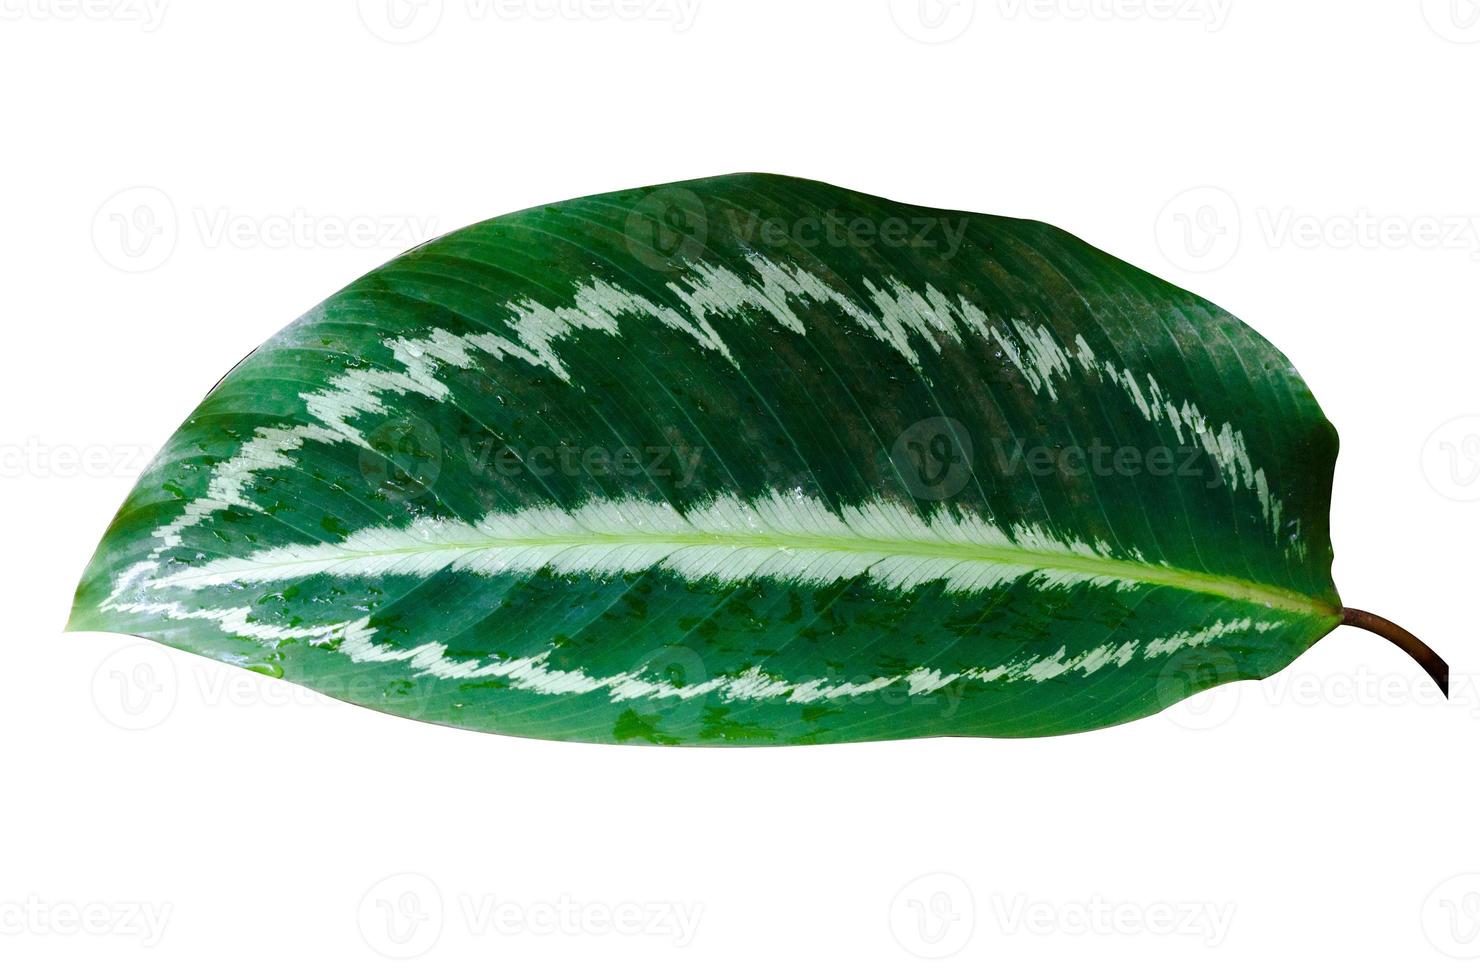 hojas calathea ornata alfiler raya fondo blanco aislar foto